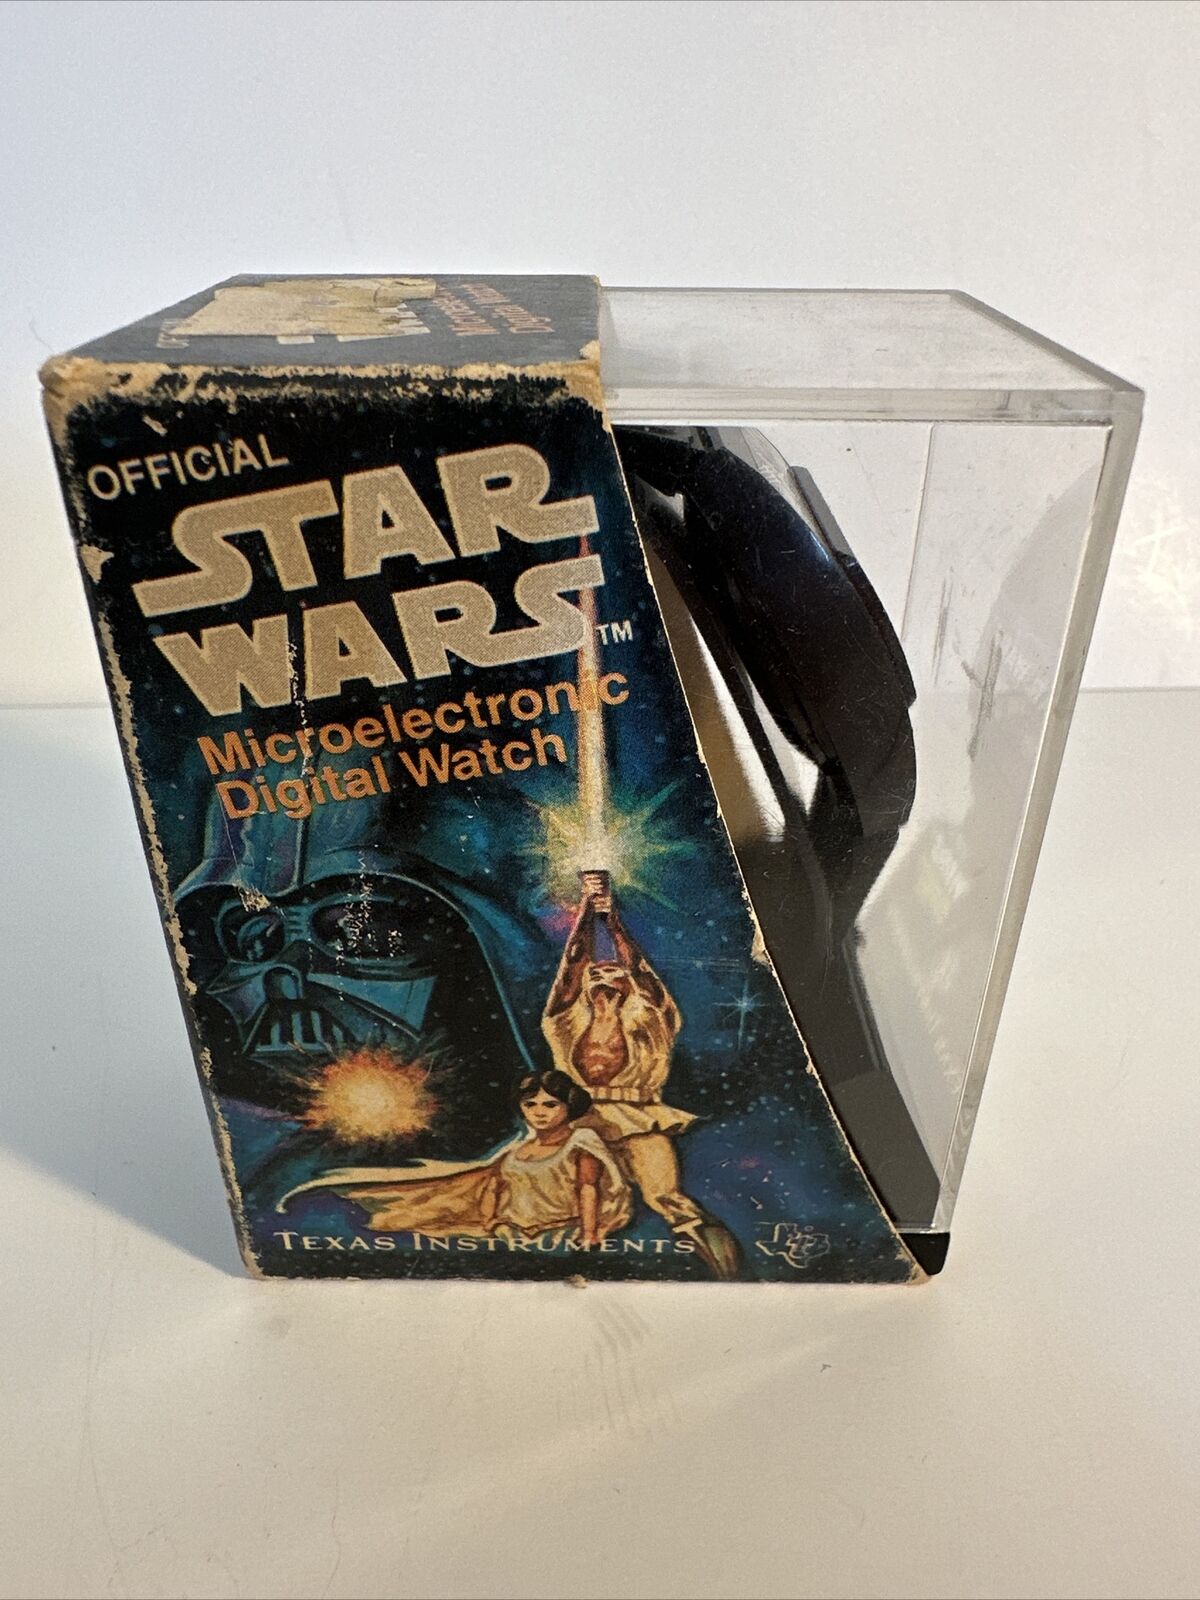 Star Wars Vintage 1977 Texas Instruments Microelectronic Digital Watch Packaging